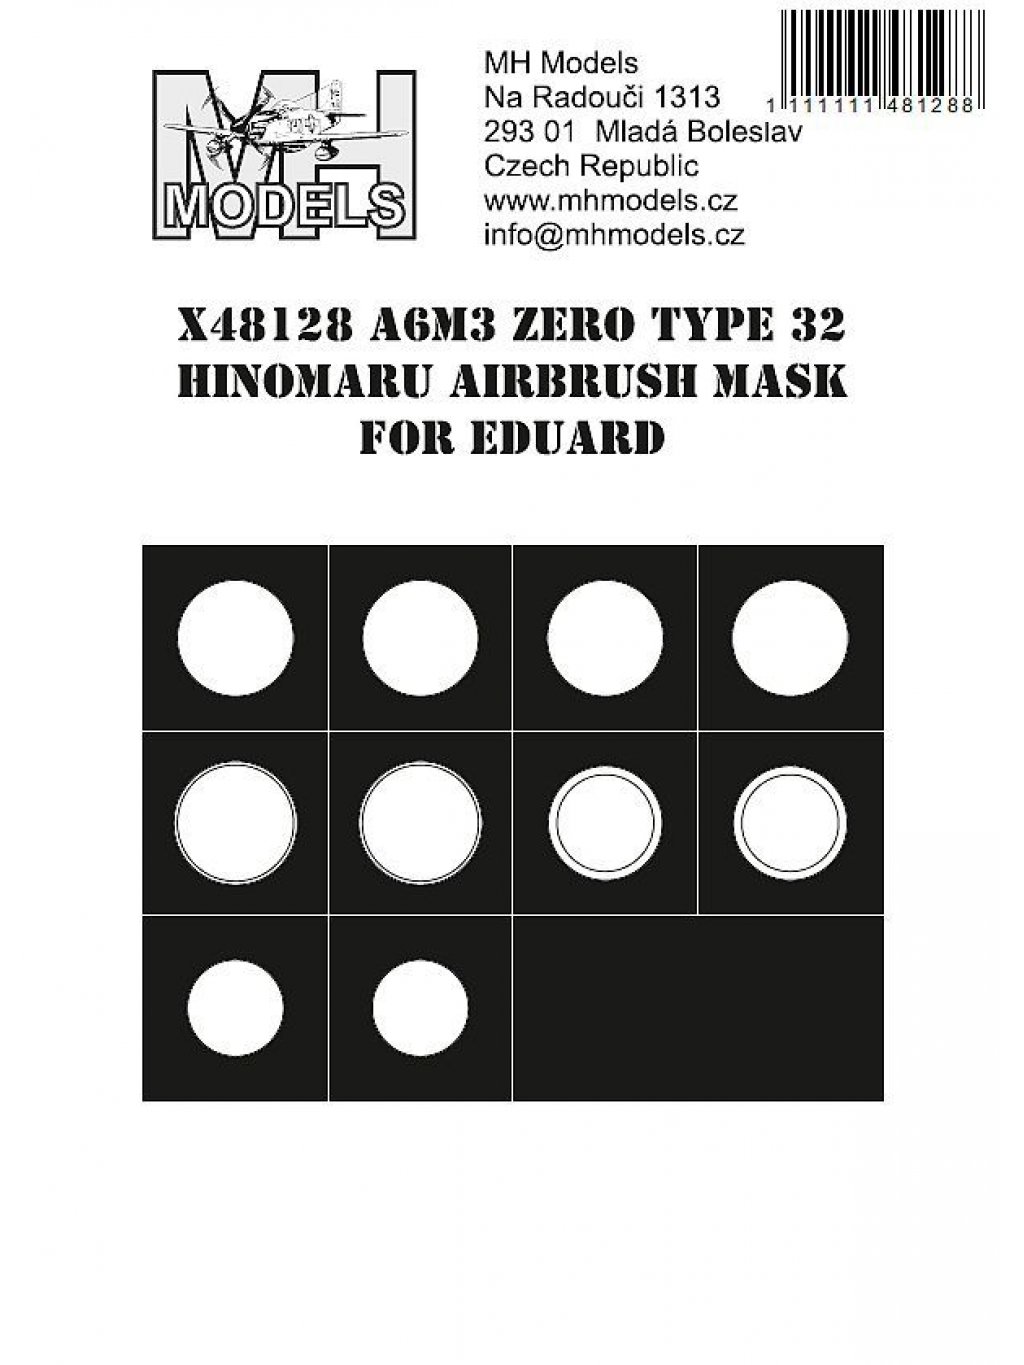 A6M3 Zero Type 32 Hinomaru airbrush mask for Eduard